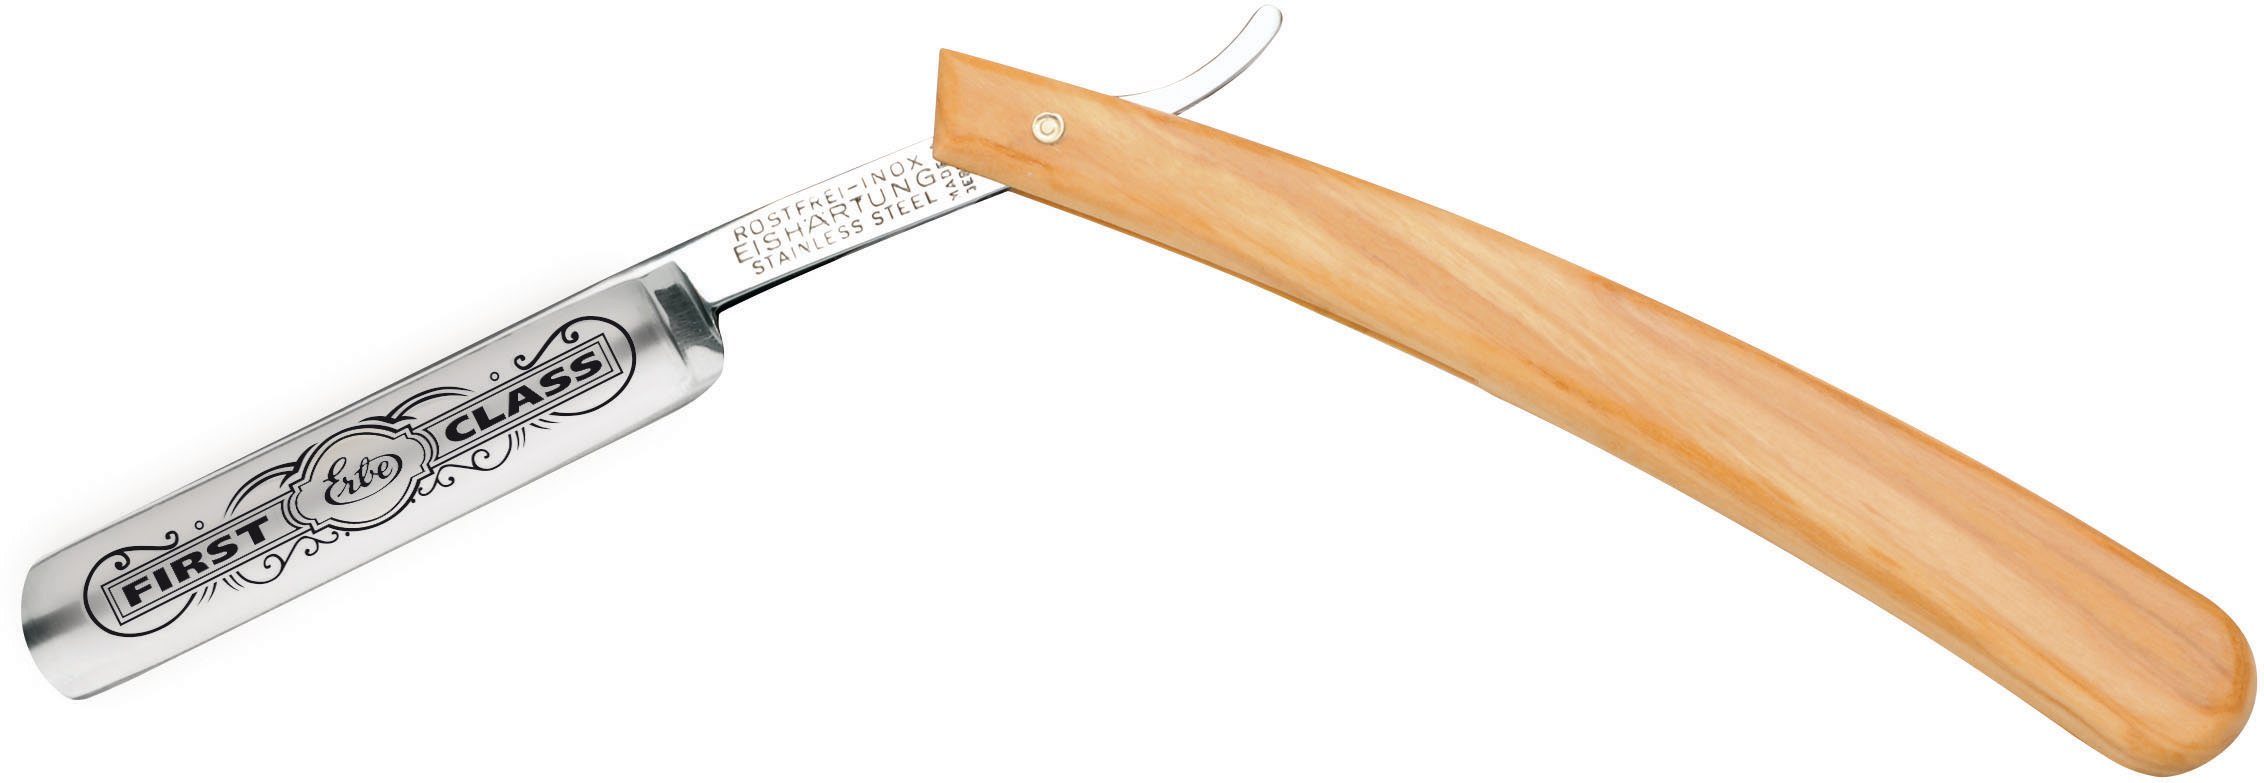 Viele neue Artikel verfügbar ERBE Rasiermesser Qualitäts-Rasiermesser mit Olivenholz-Griff